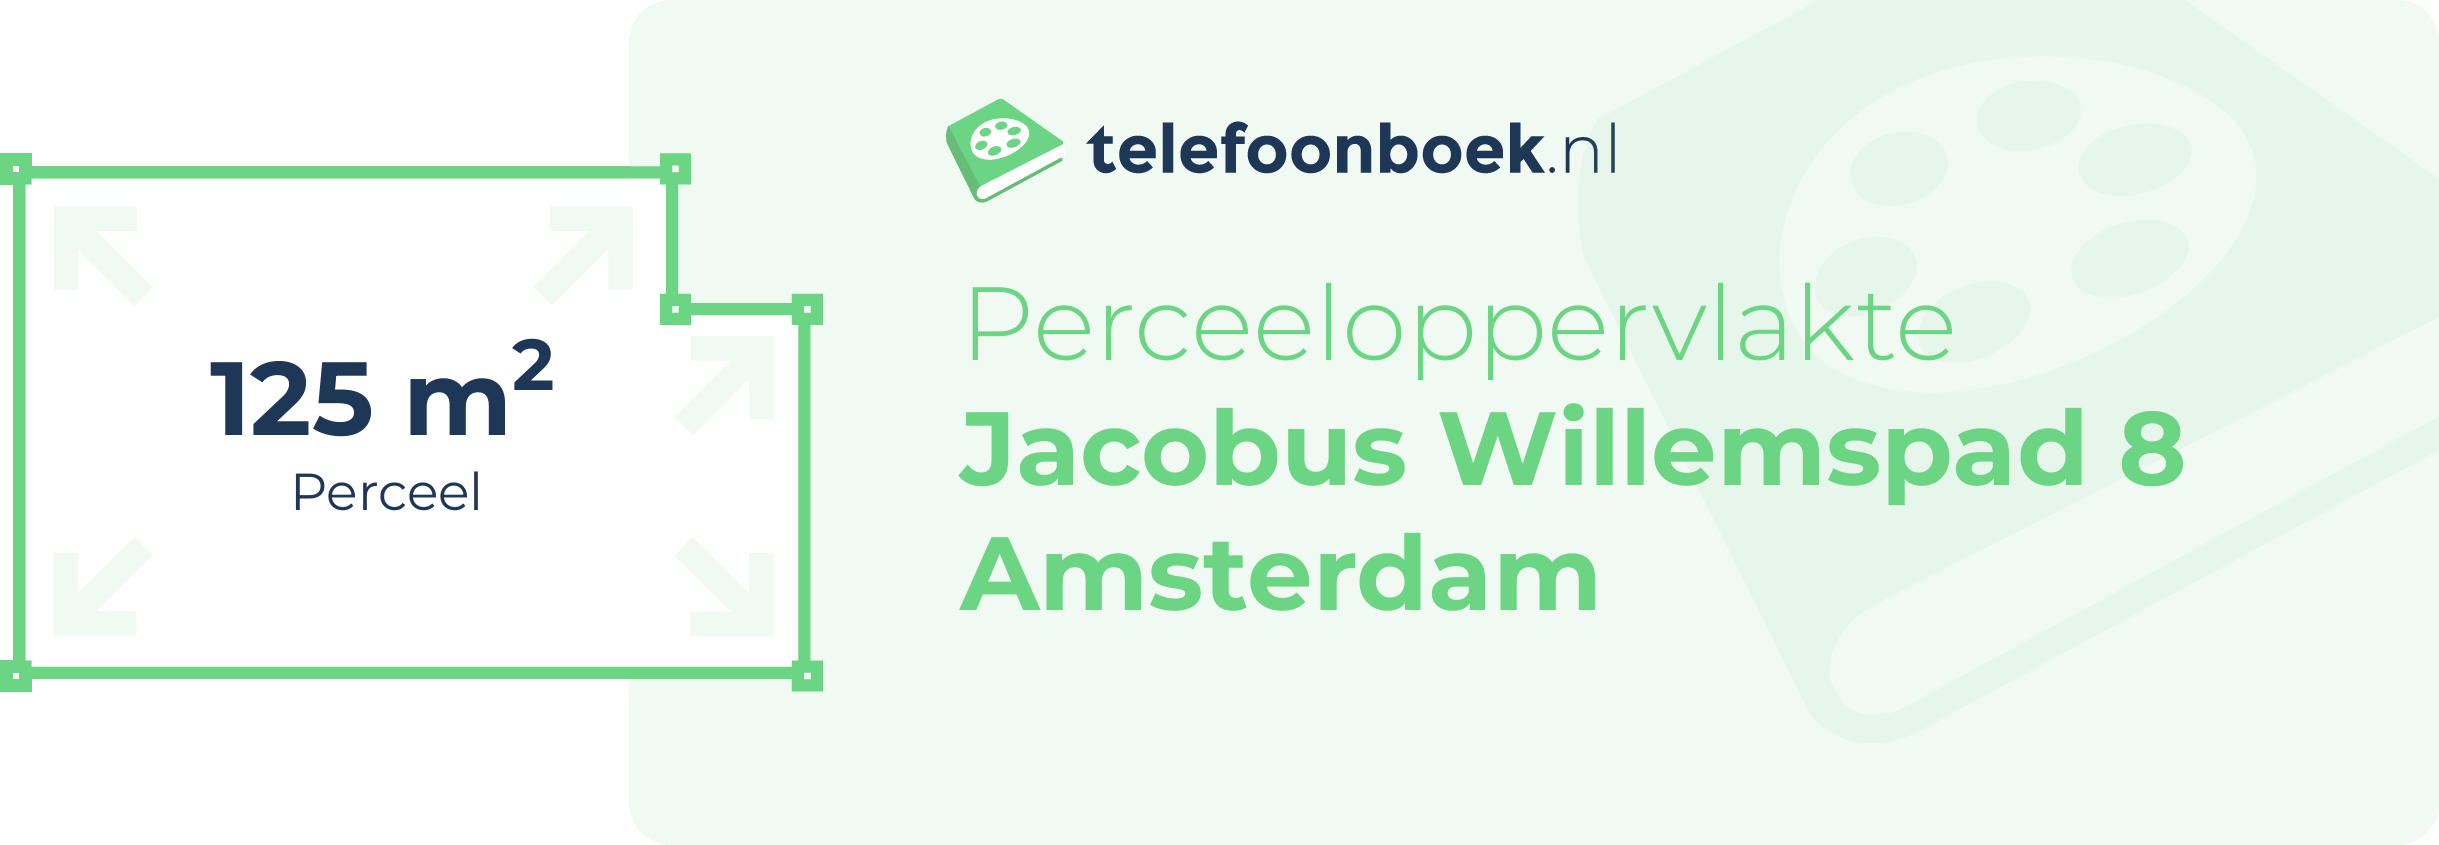 Perceeloppervlakte Jacobus Willemspad 8 Amsterdam